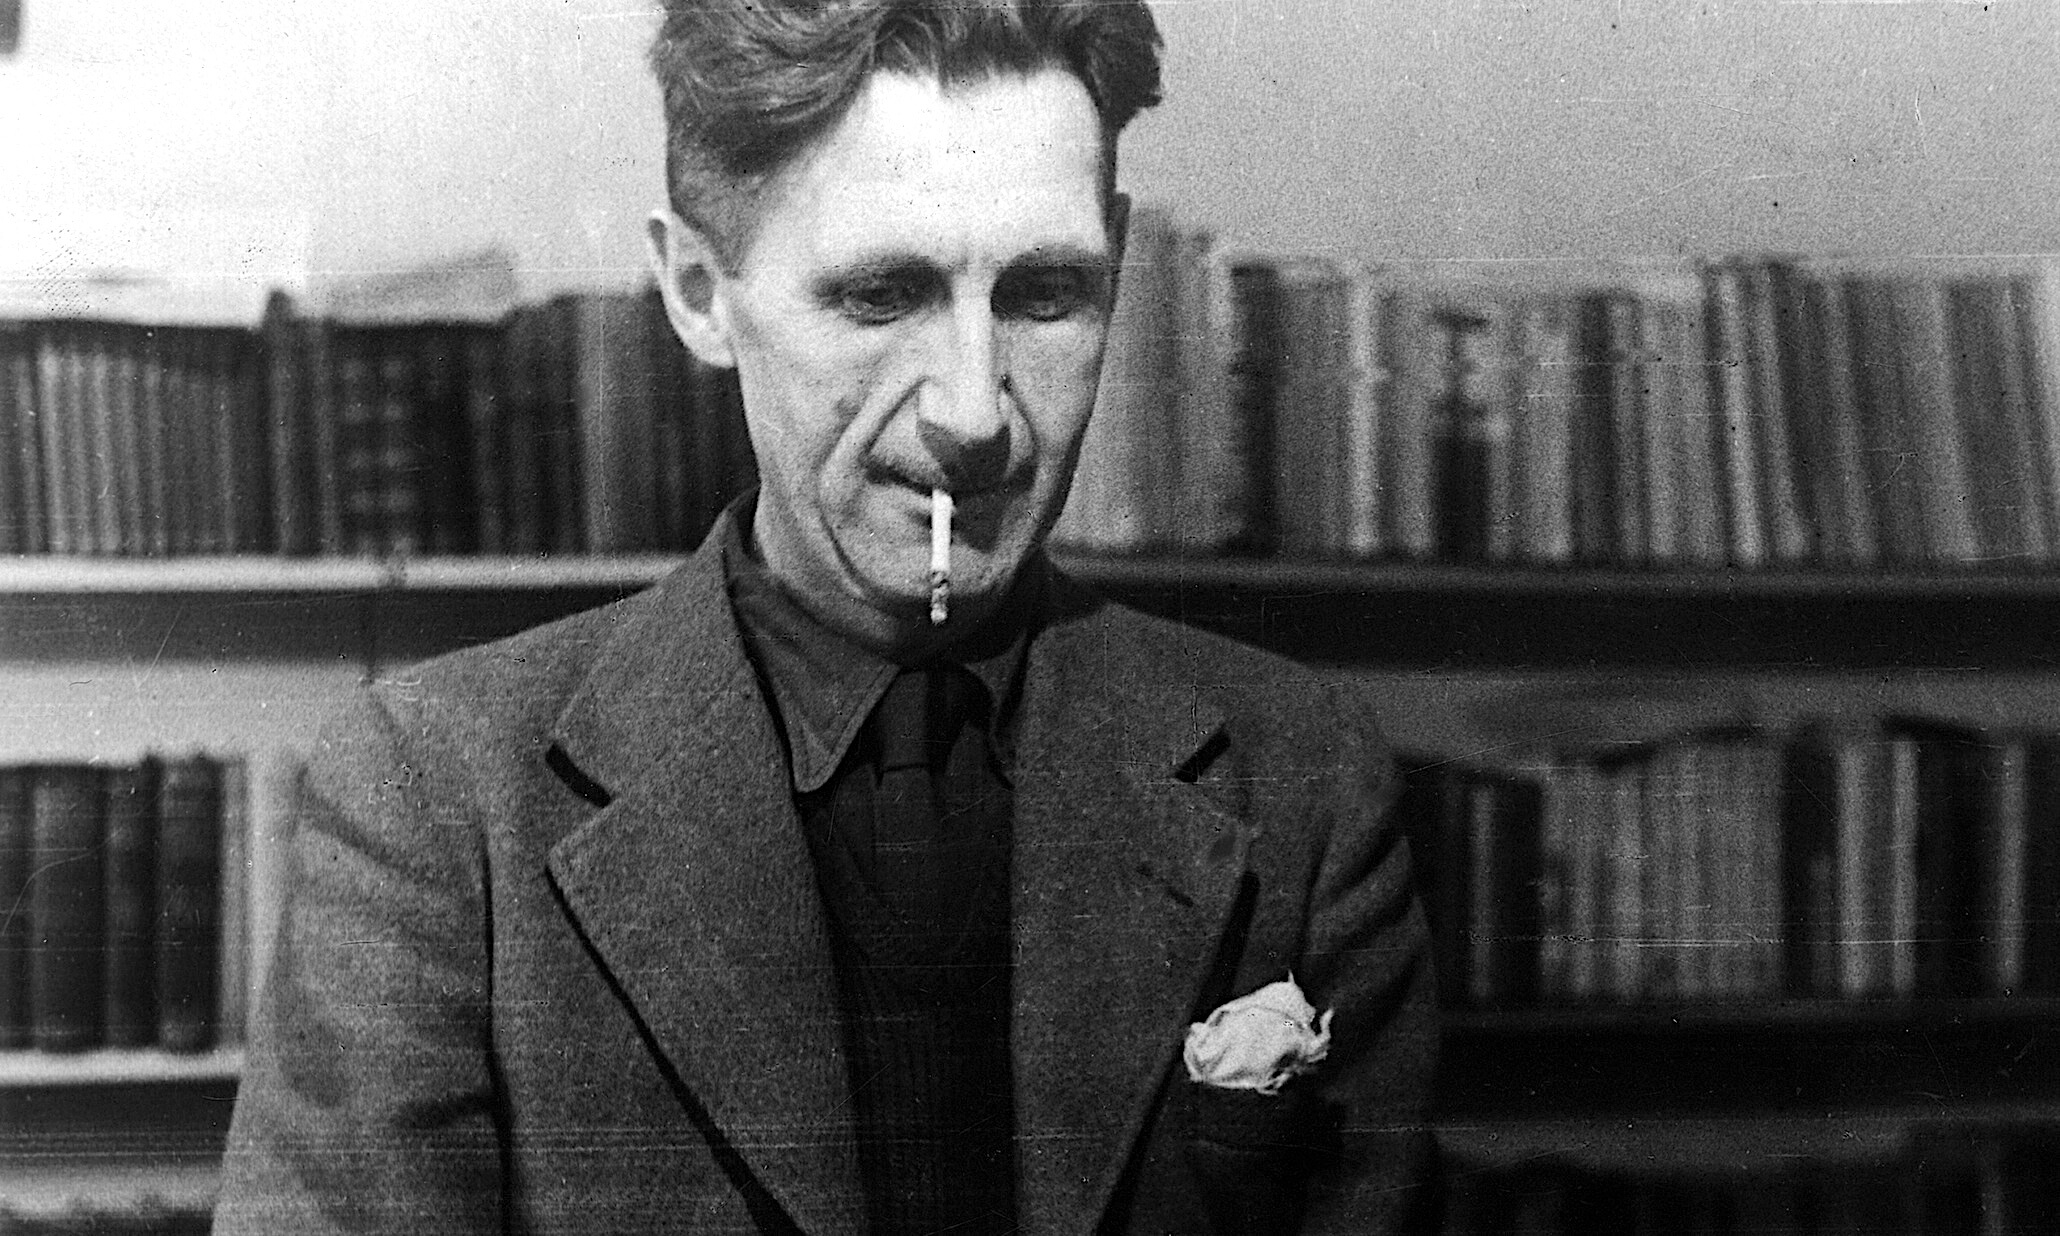 George Orwell at a typewriter